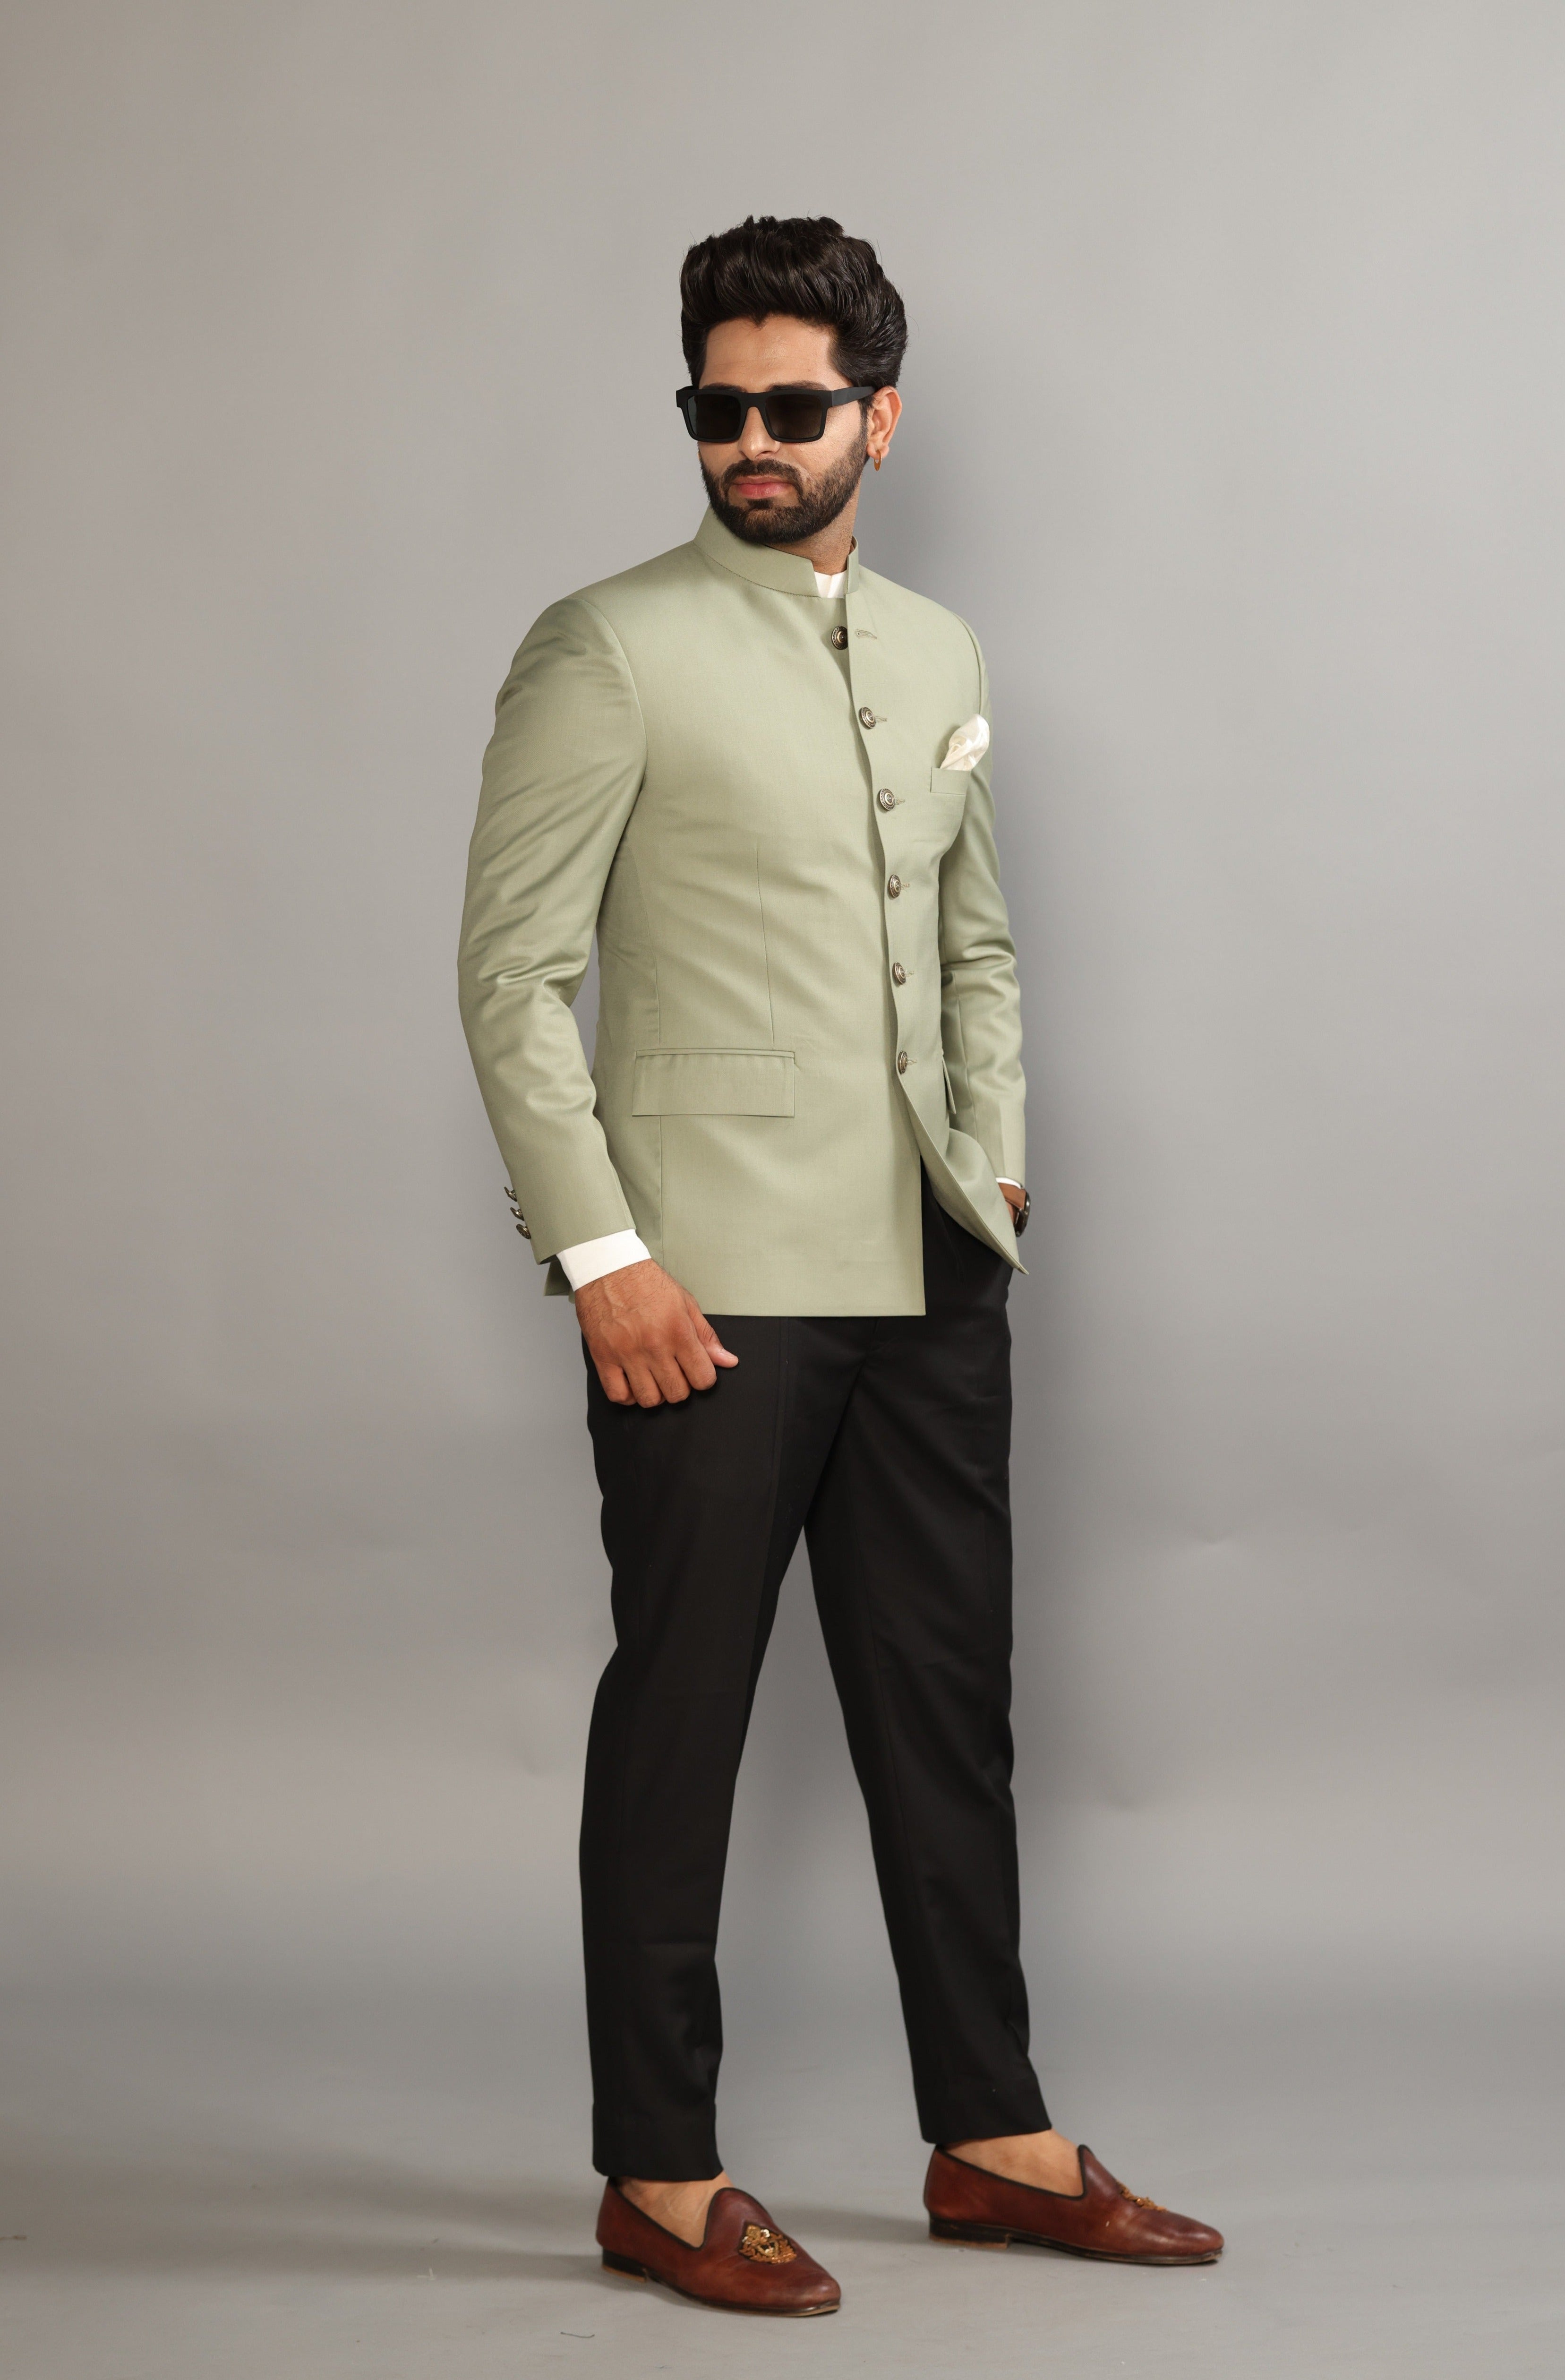 Green Blazer Combination || Green Blazer Matching Shirt and Pants - YouTube